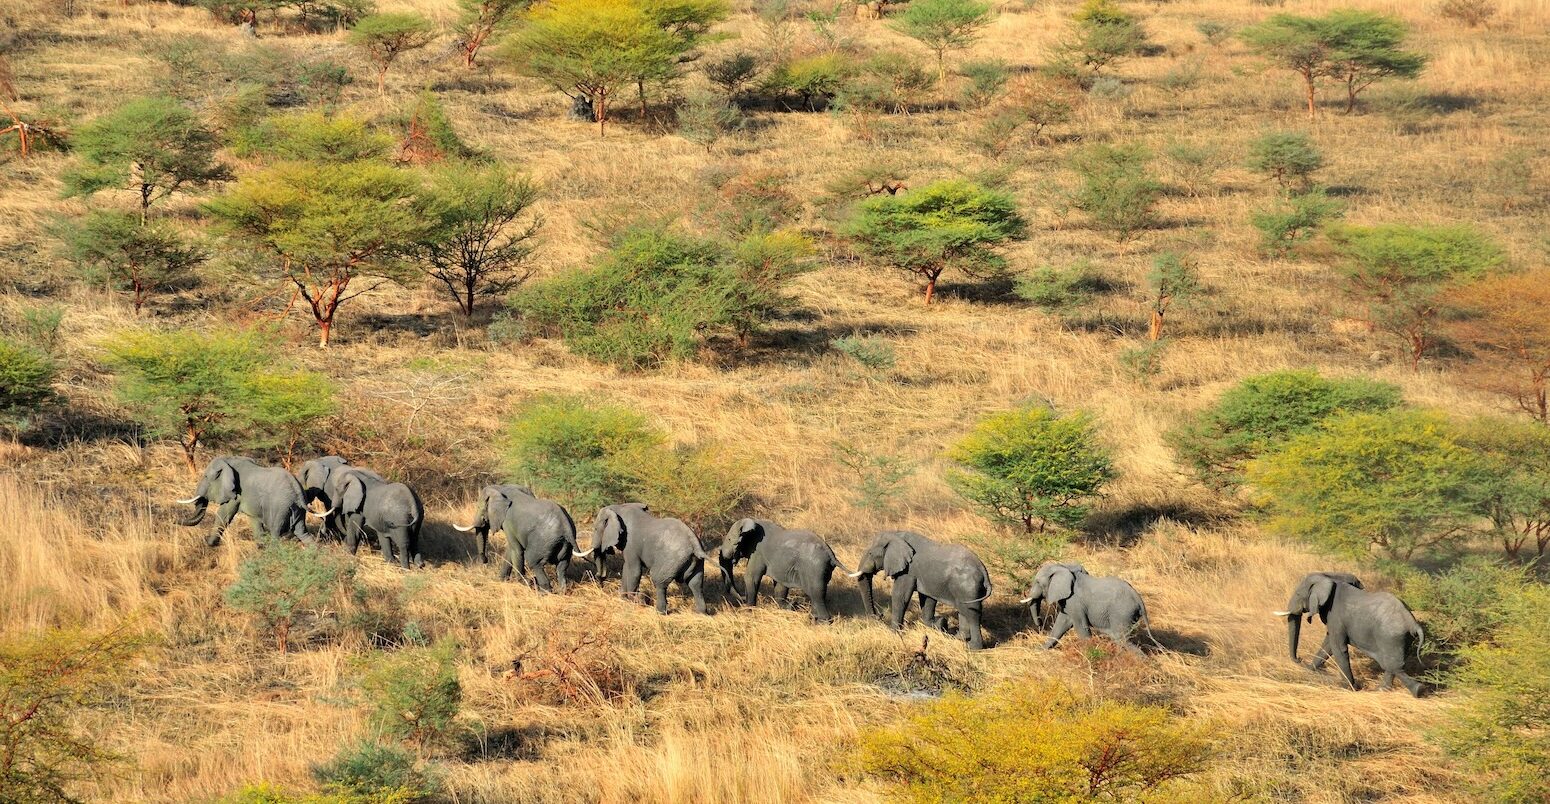 Elephants in the Savanna, South Sudan.